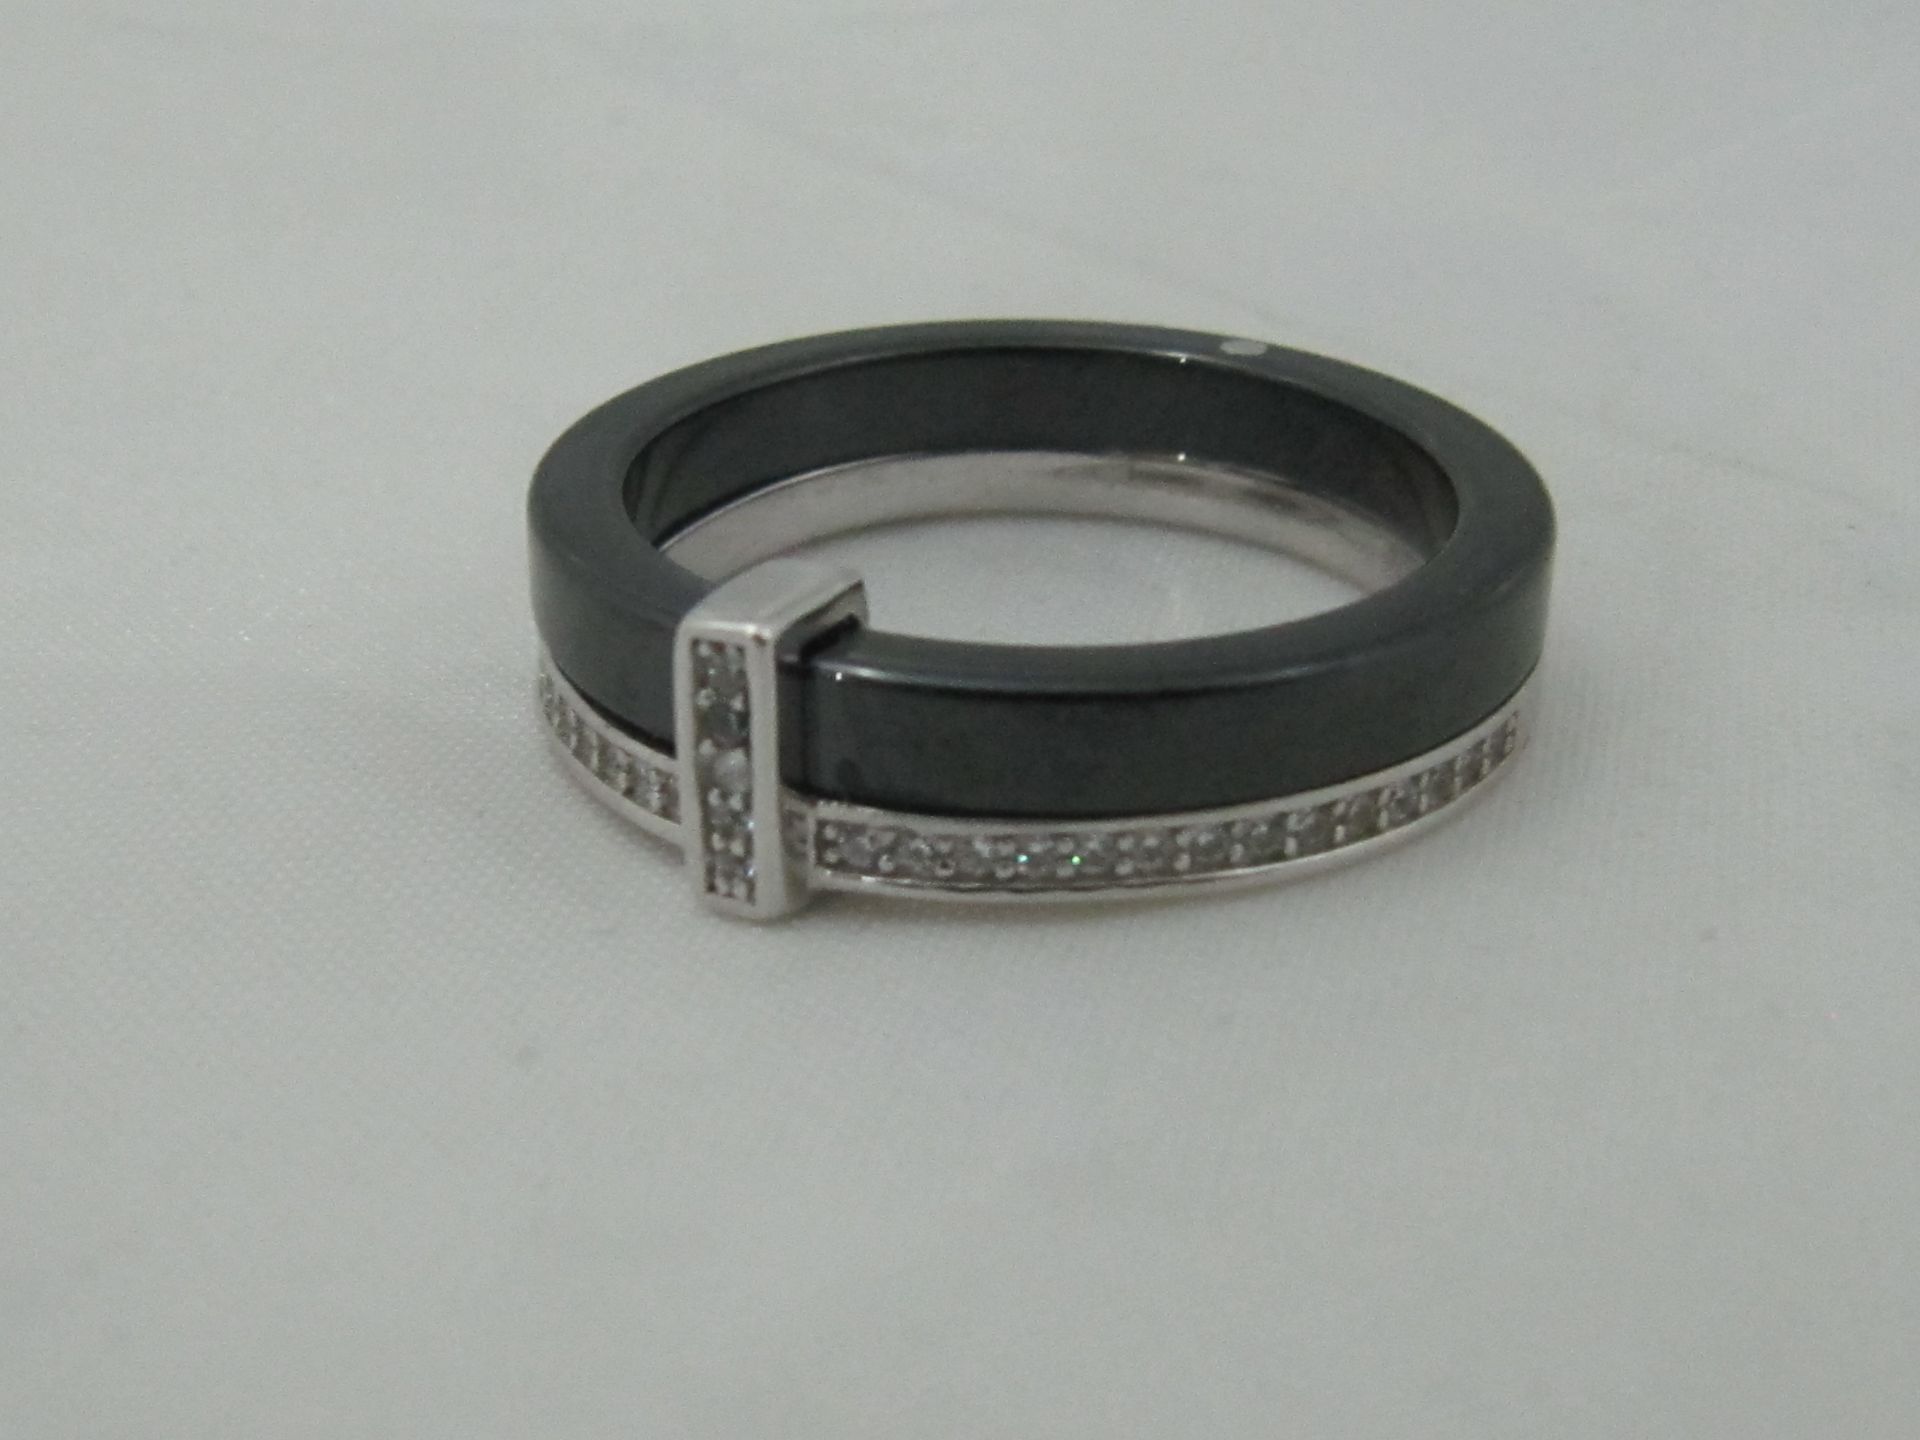 Stunning 10k White Gold Filled Ring. Size S.